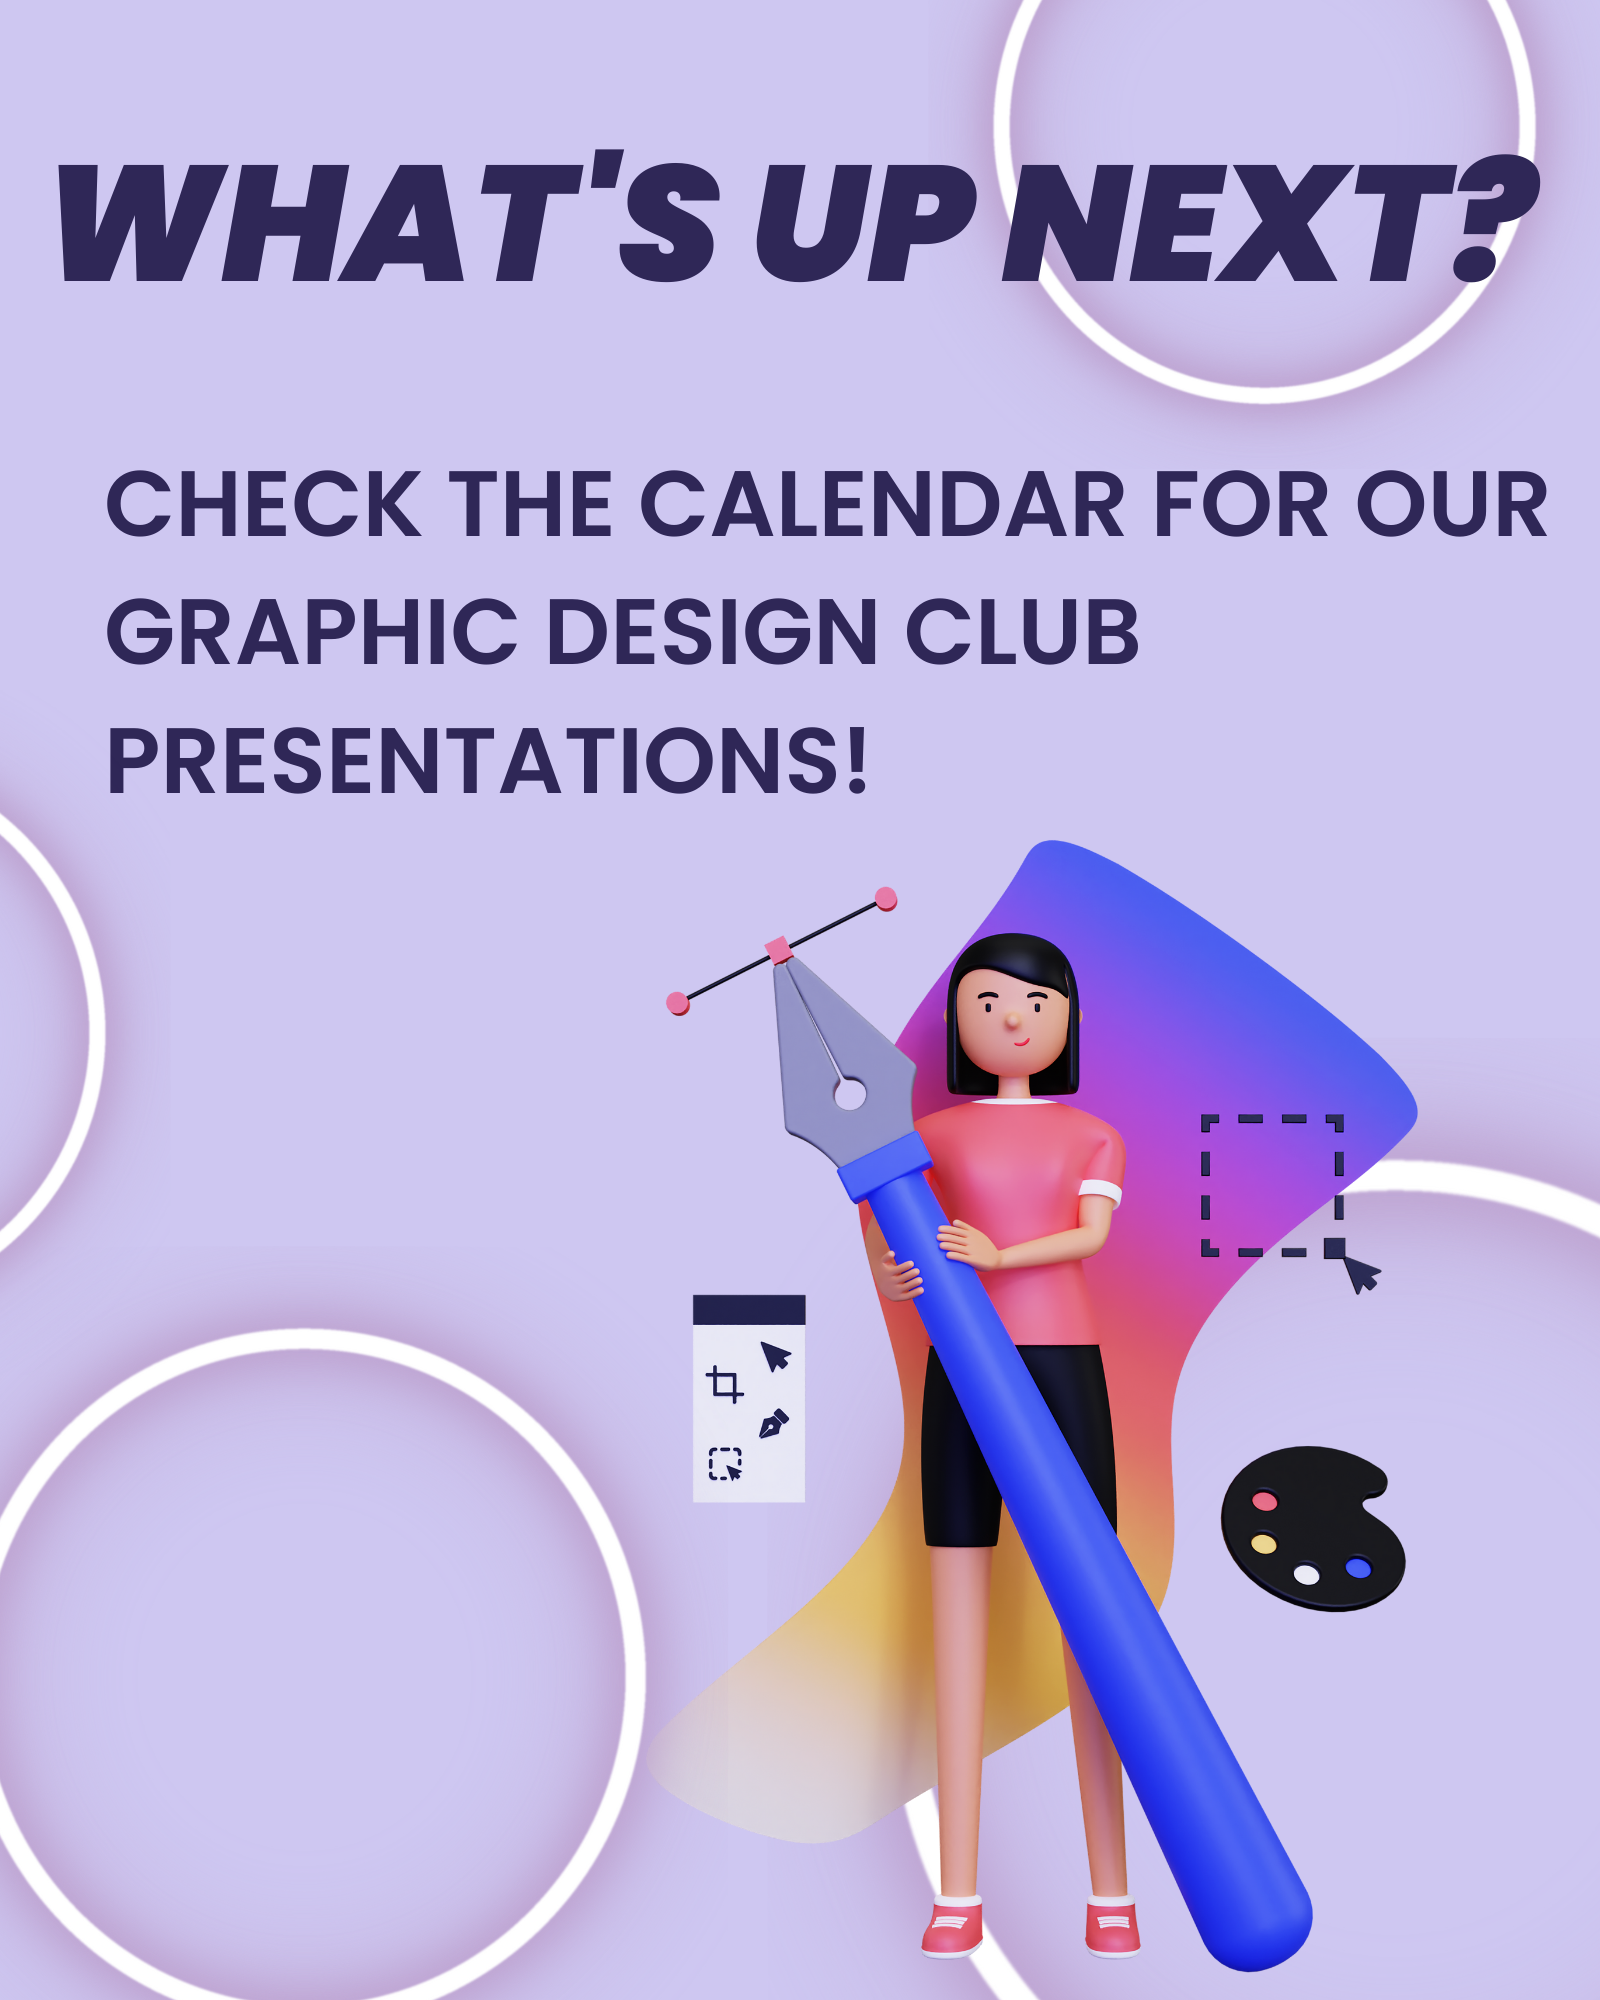 Check the calendar for our graphic design club presentations!